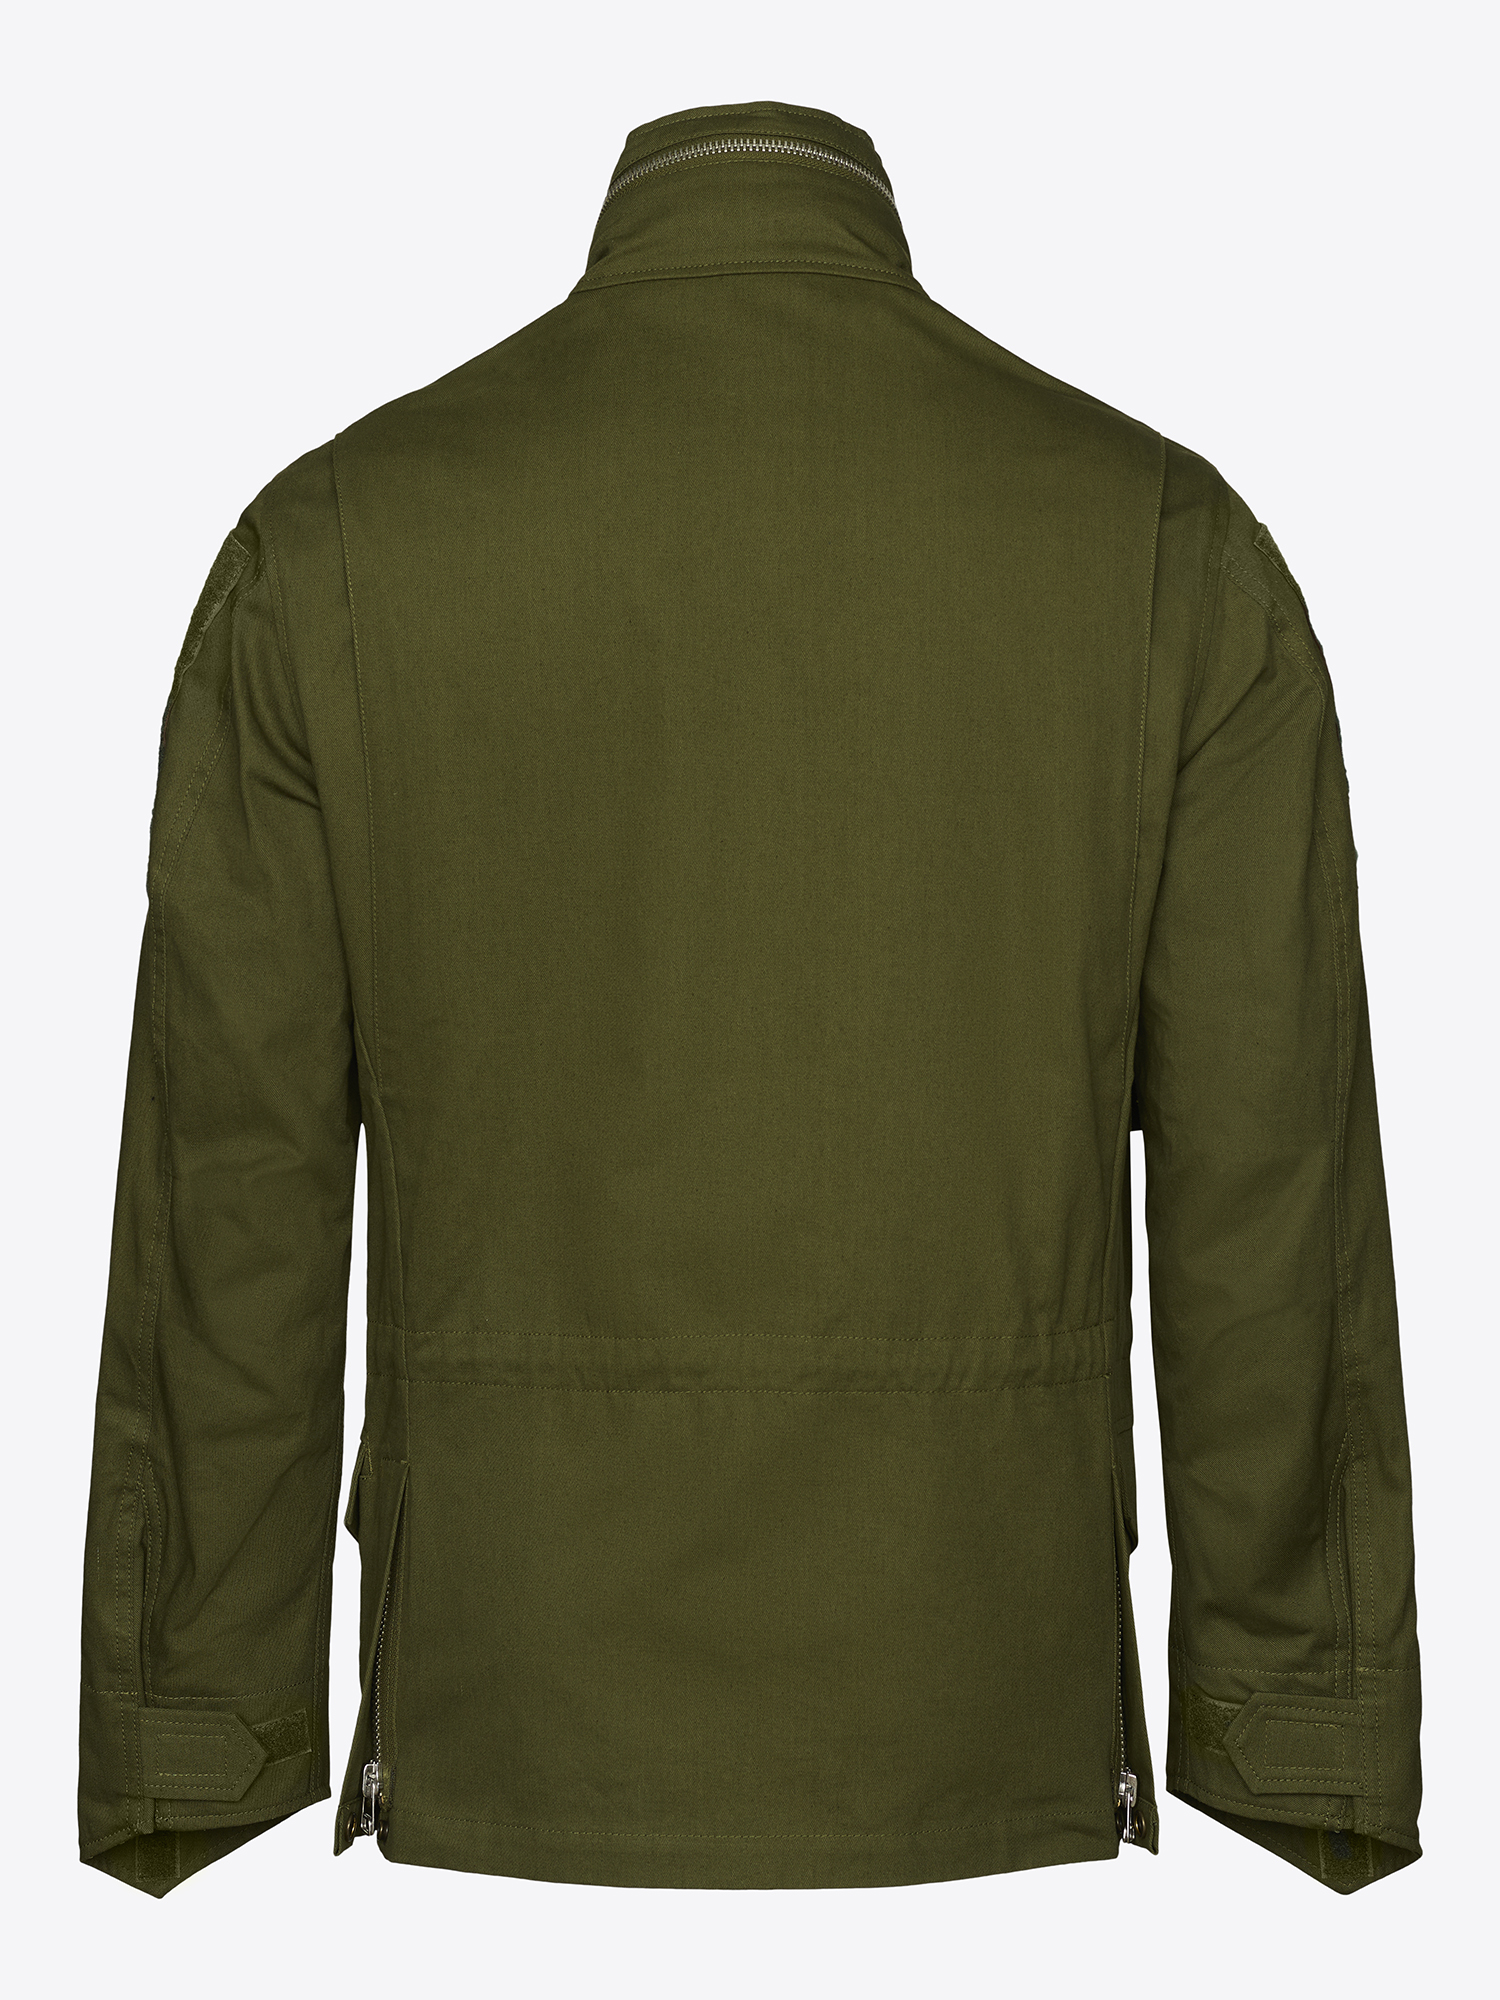 M65 Field jacket enhanced - Army green OG107